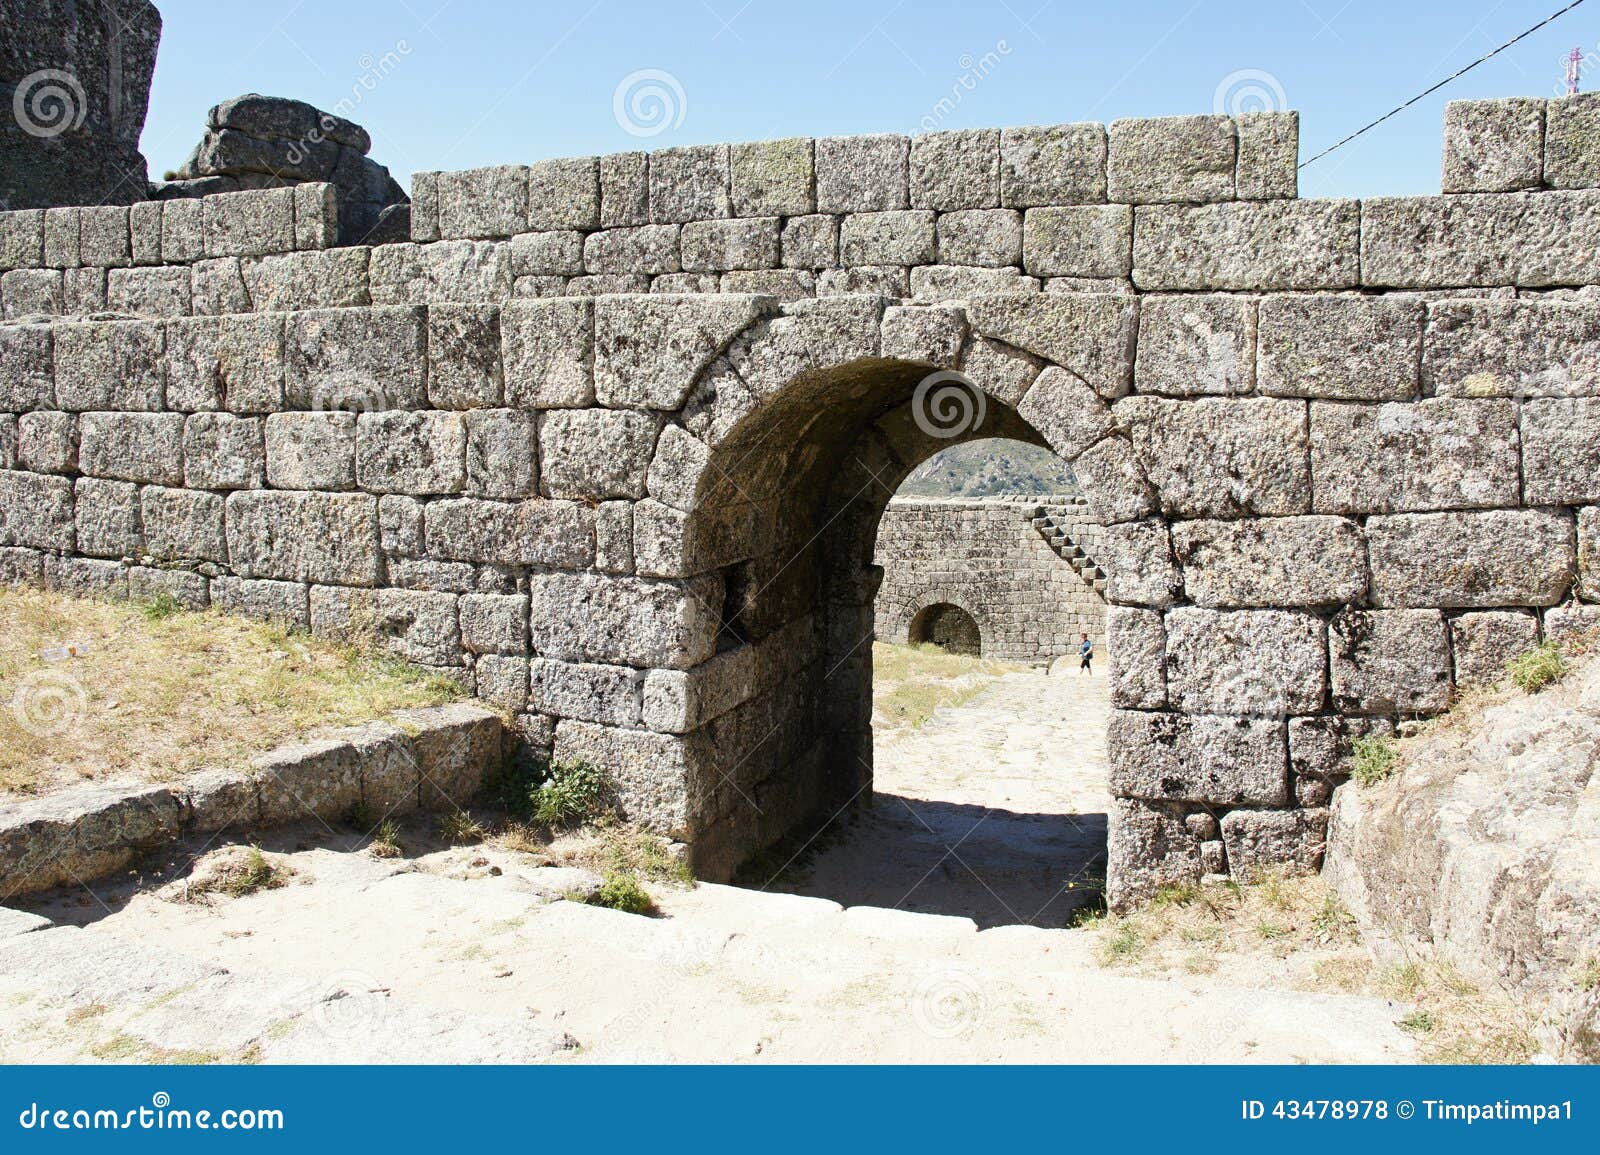 entrance in bulwark of castle in monsanto, portugal